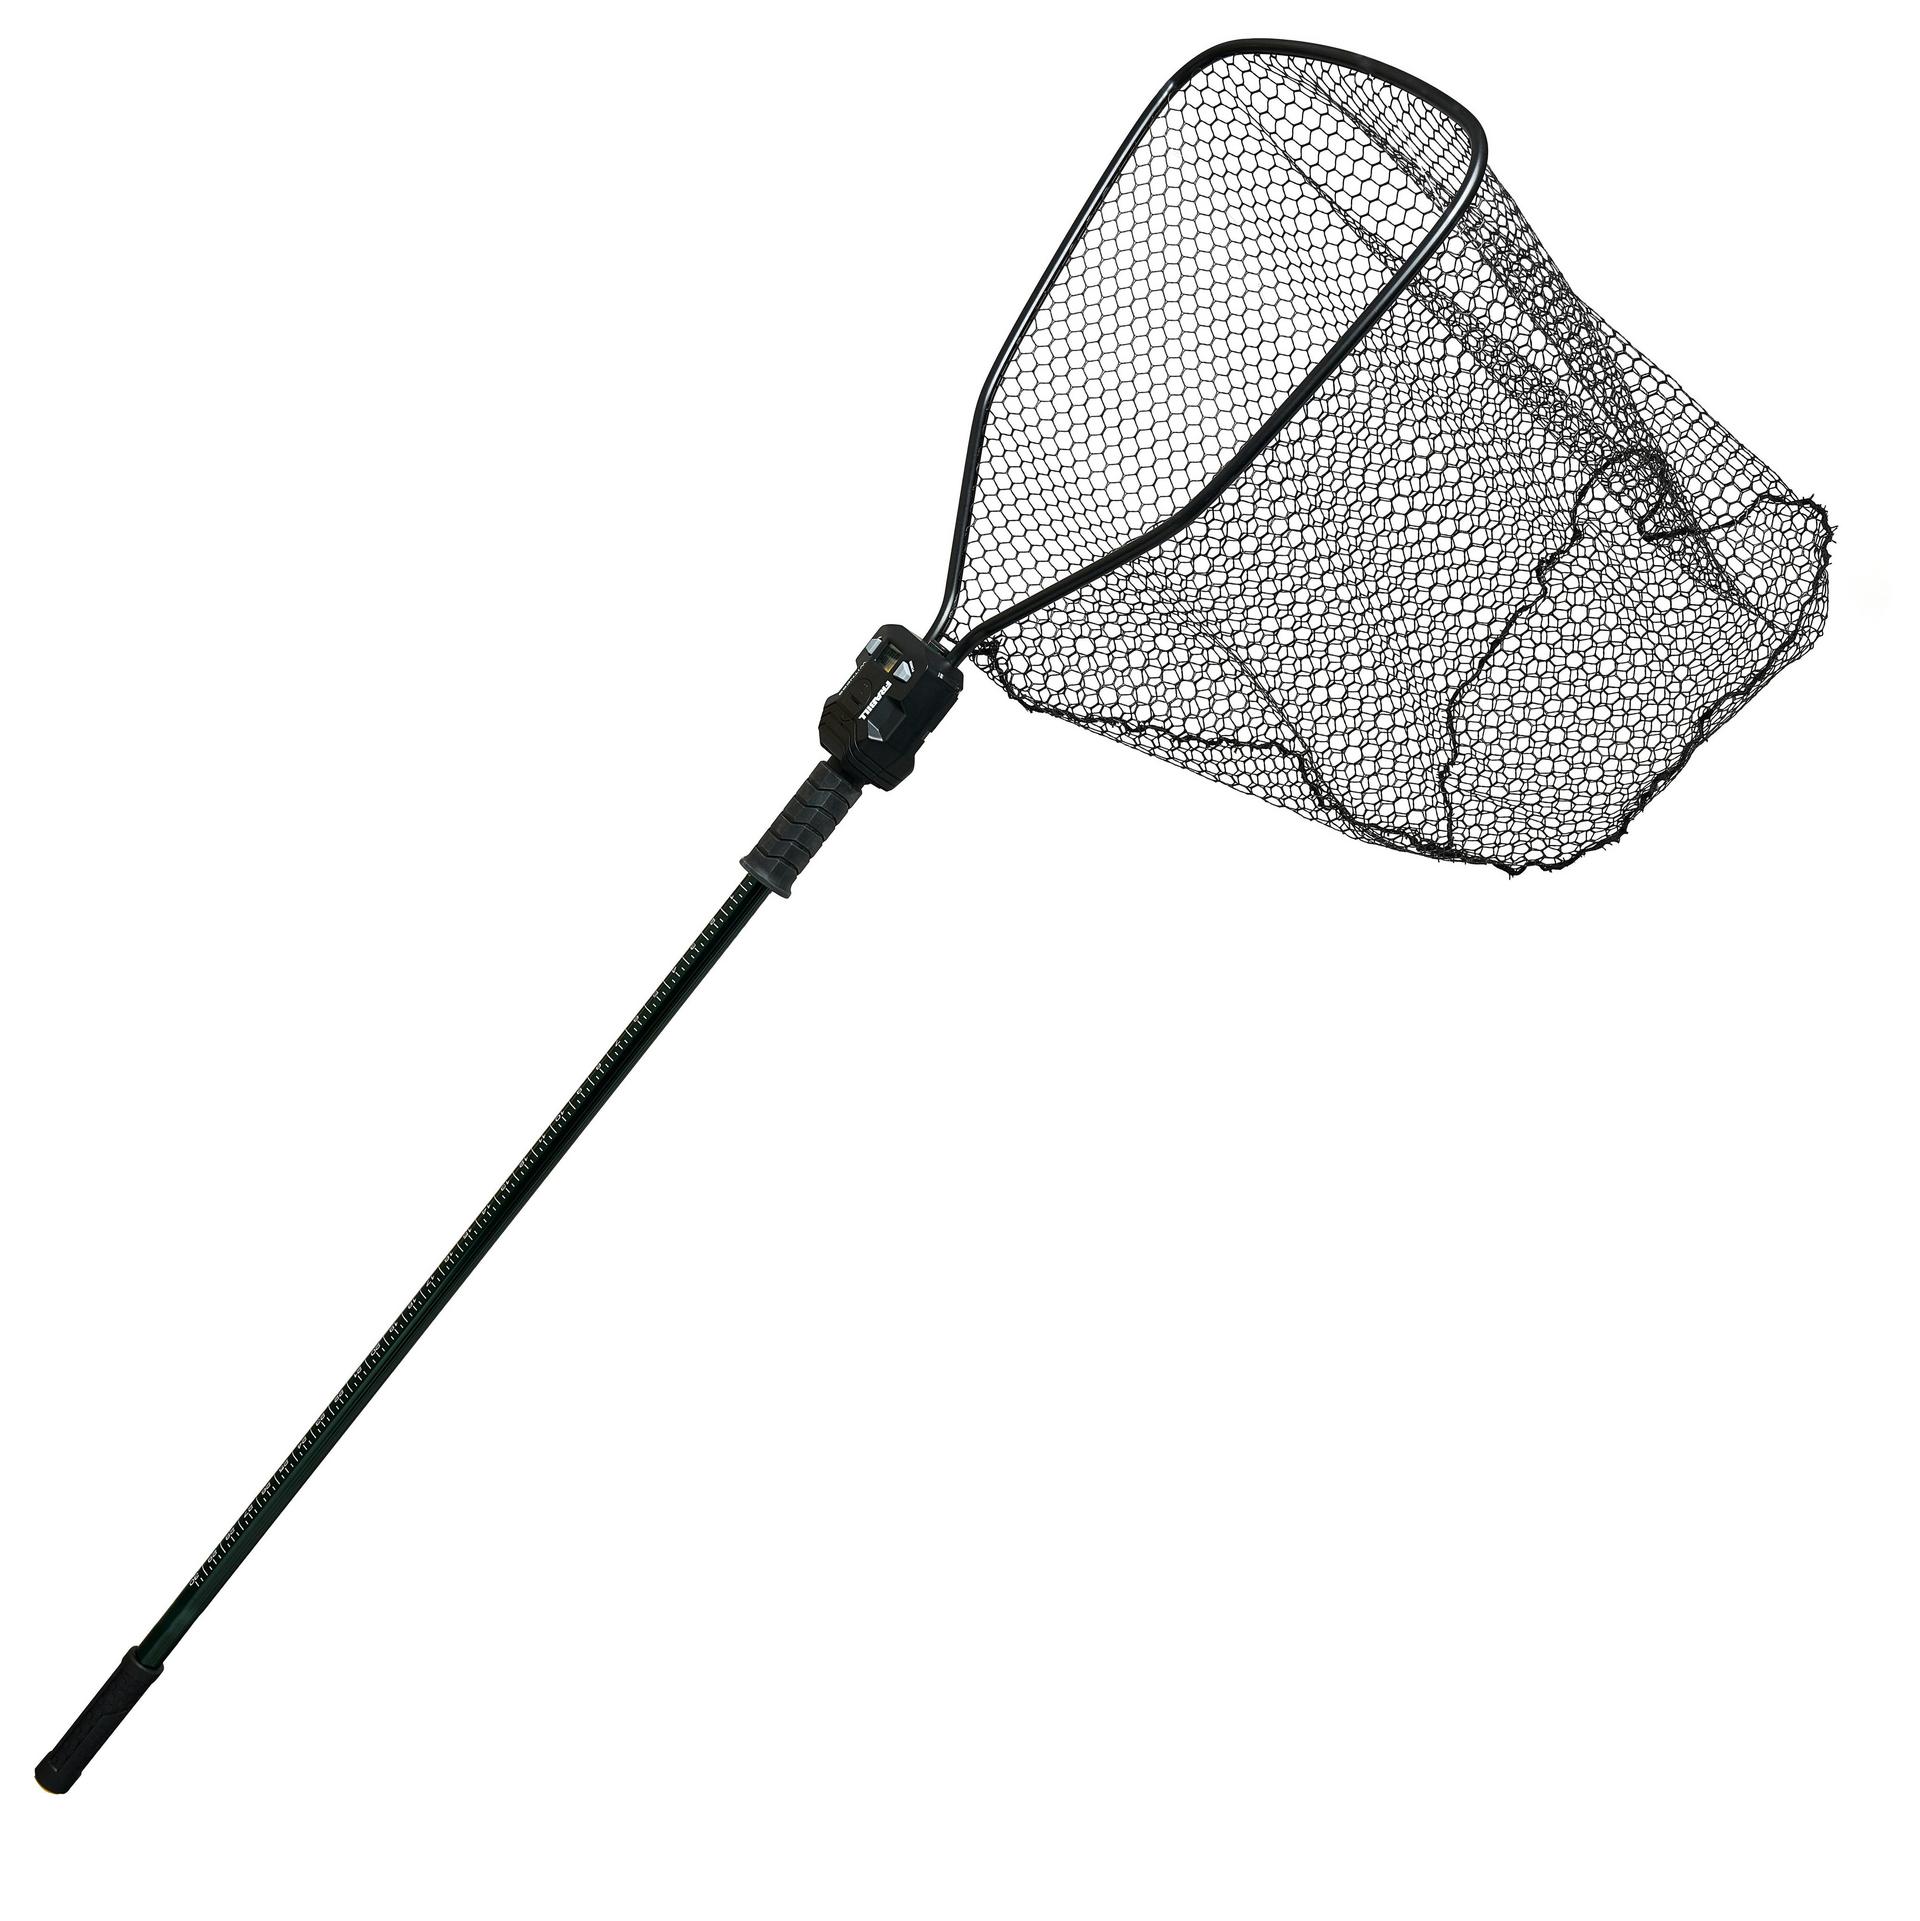 FRABILL 8507 Fishing Equipment Nets & Traps : : Sports